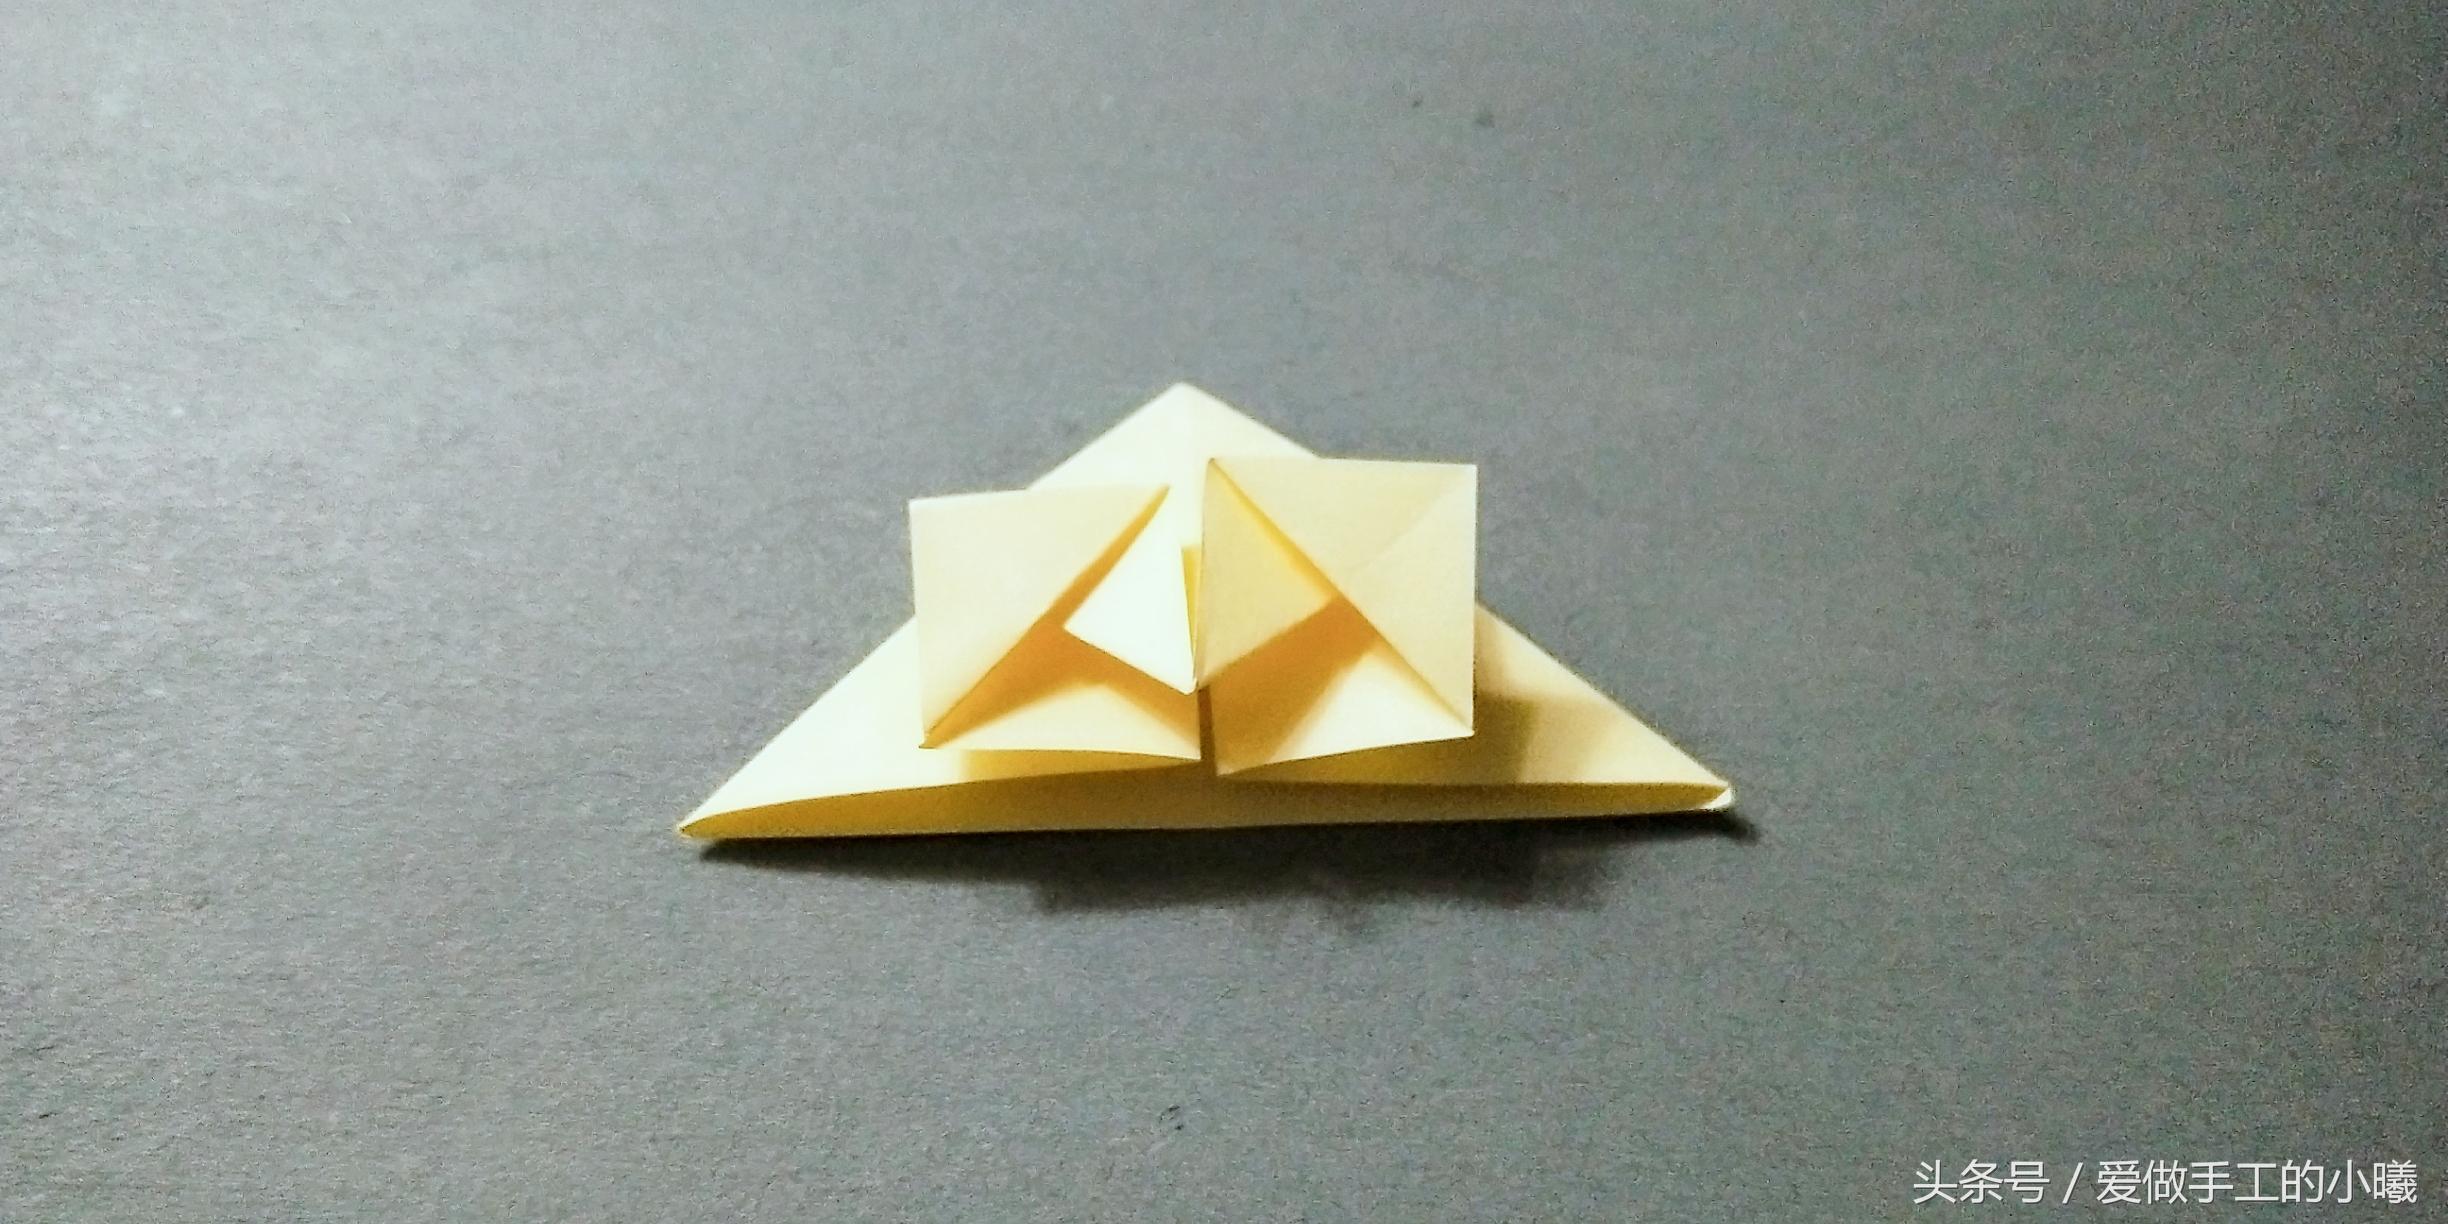 折正方形的折纸方法图片